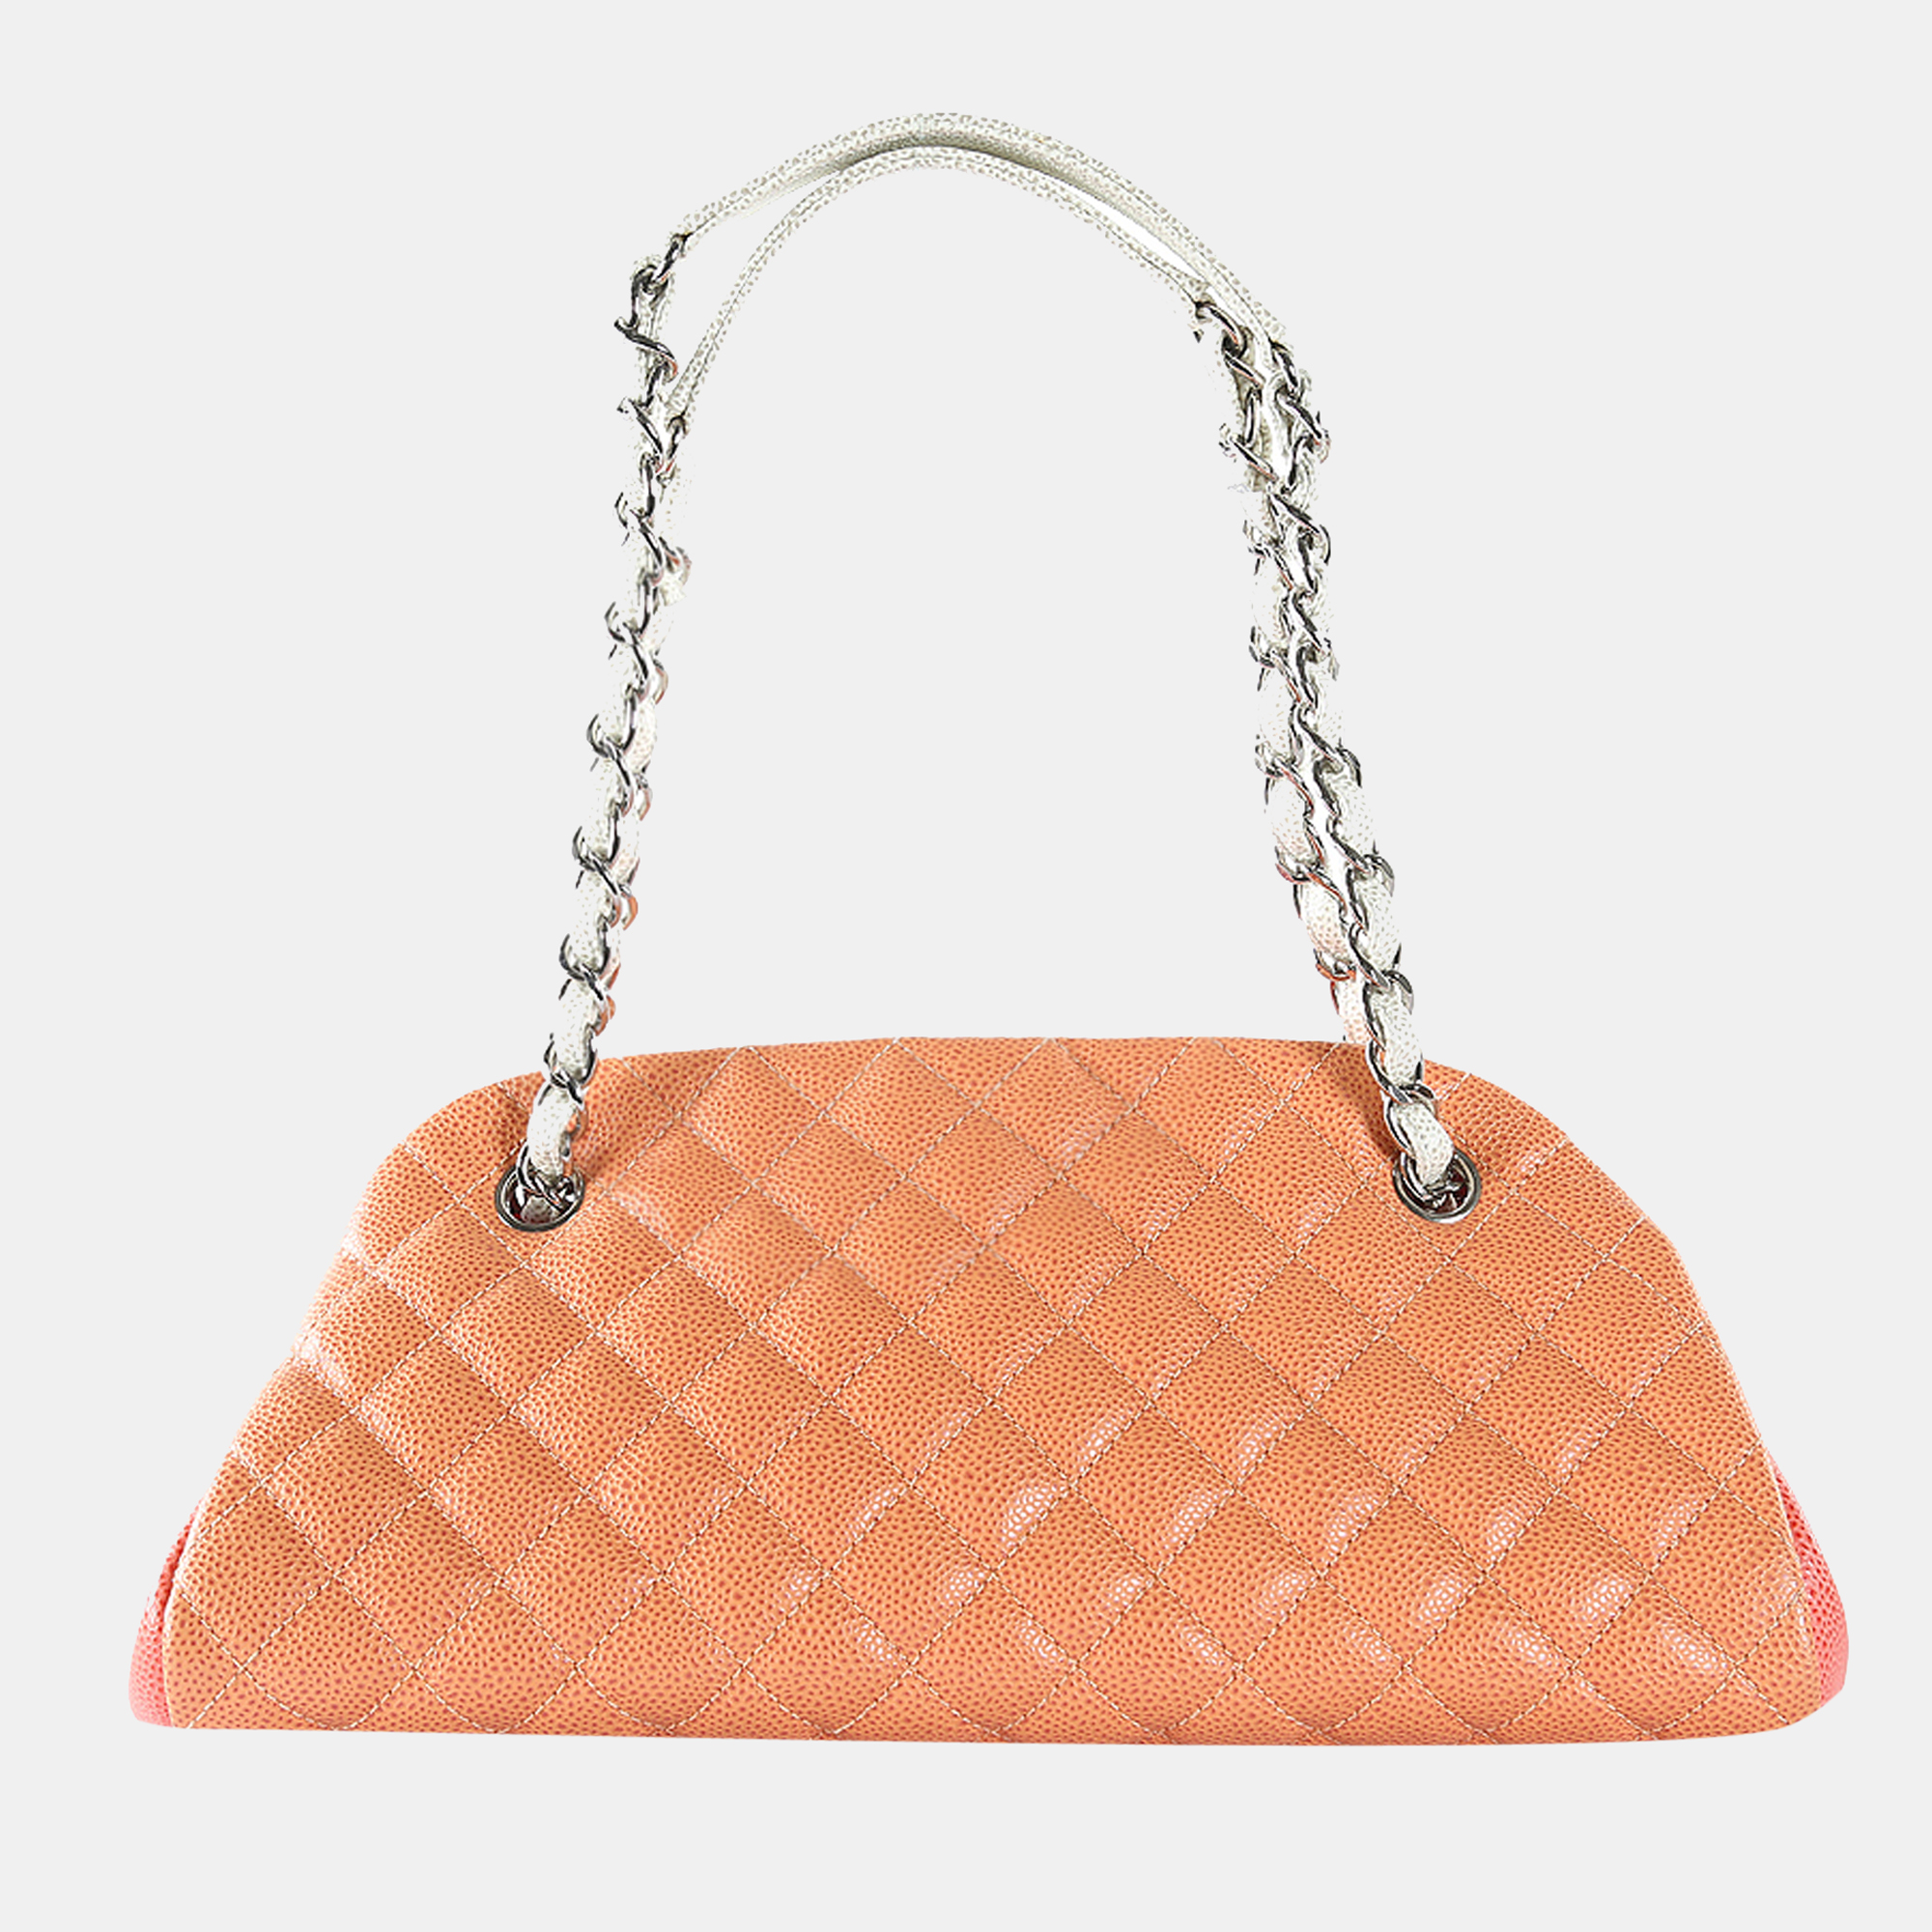 Chanel Orange Caviar Leather Just Mademoiselle Medium Bowling Bag